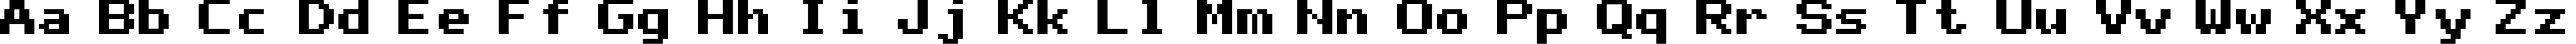 Пример написания английского алфавита шрифтом mono 07_65